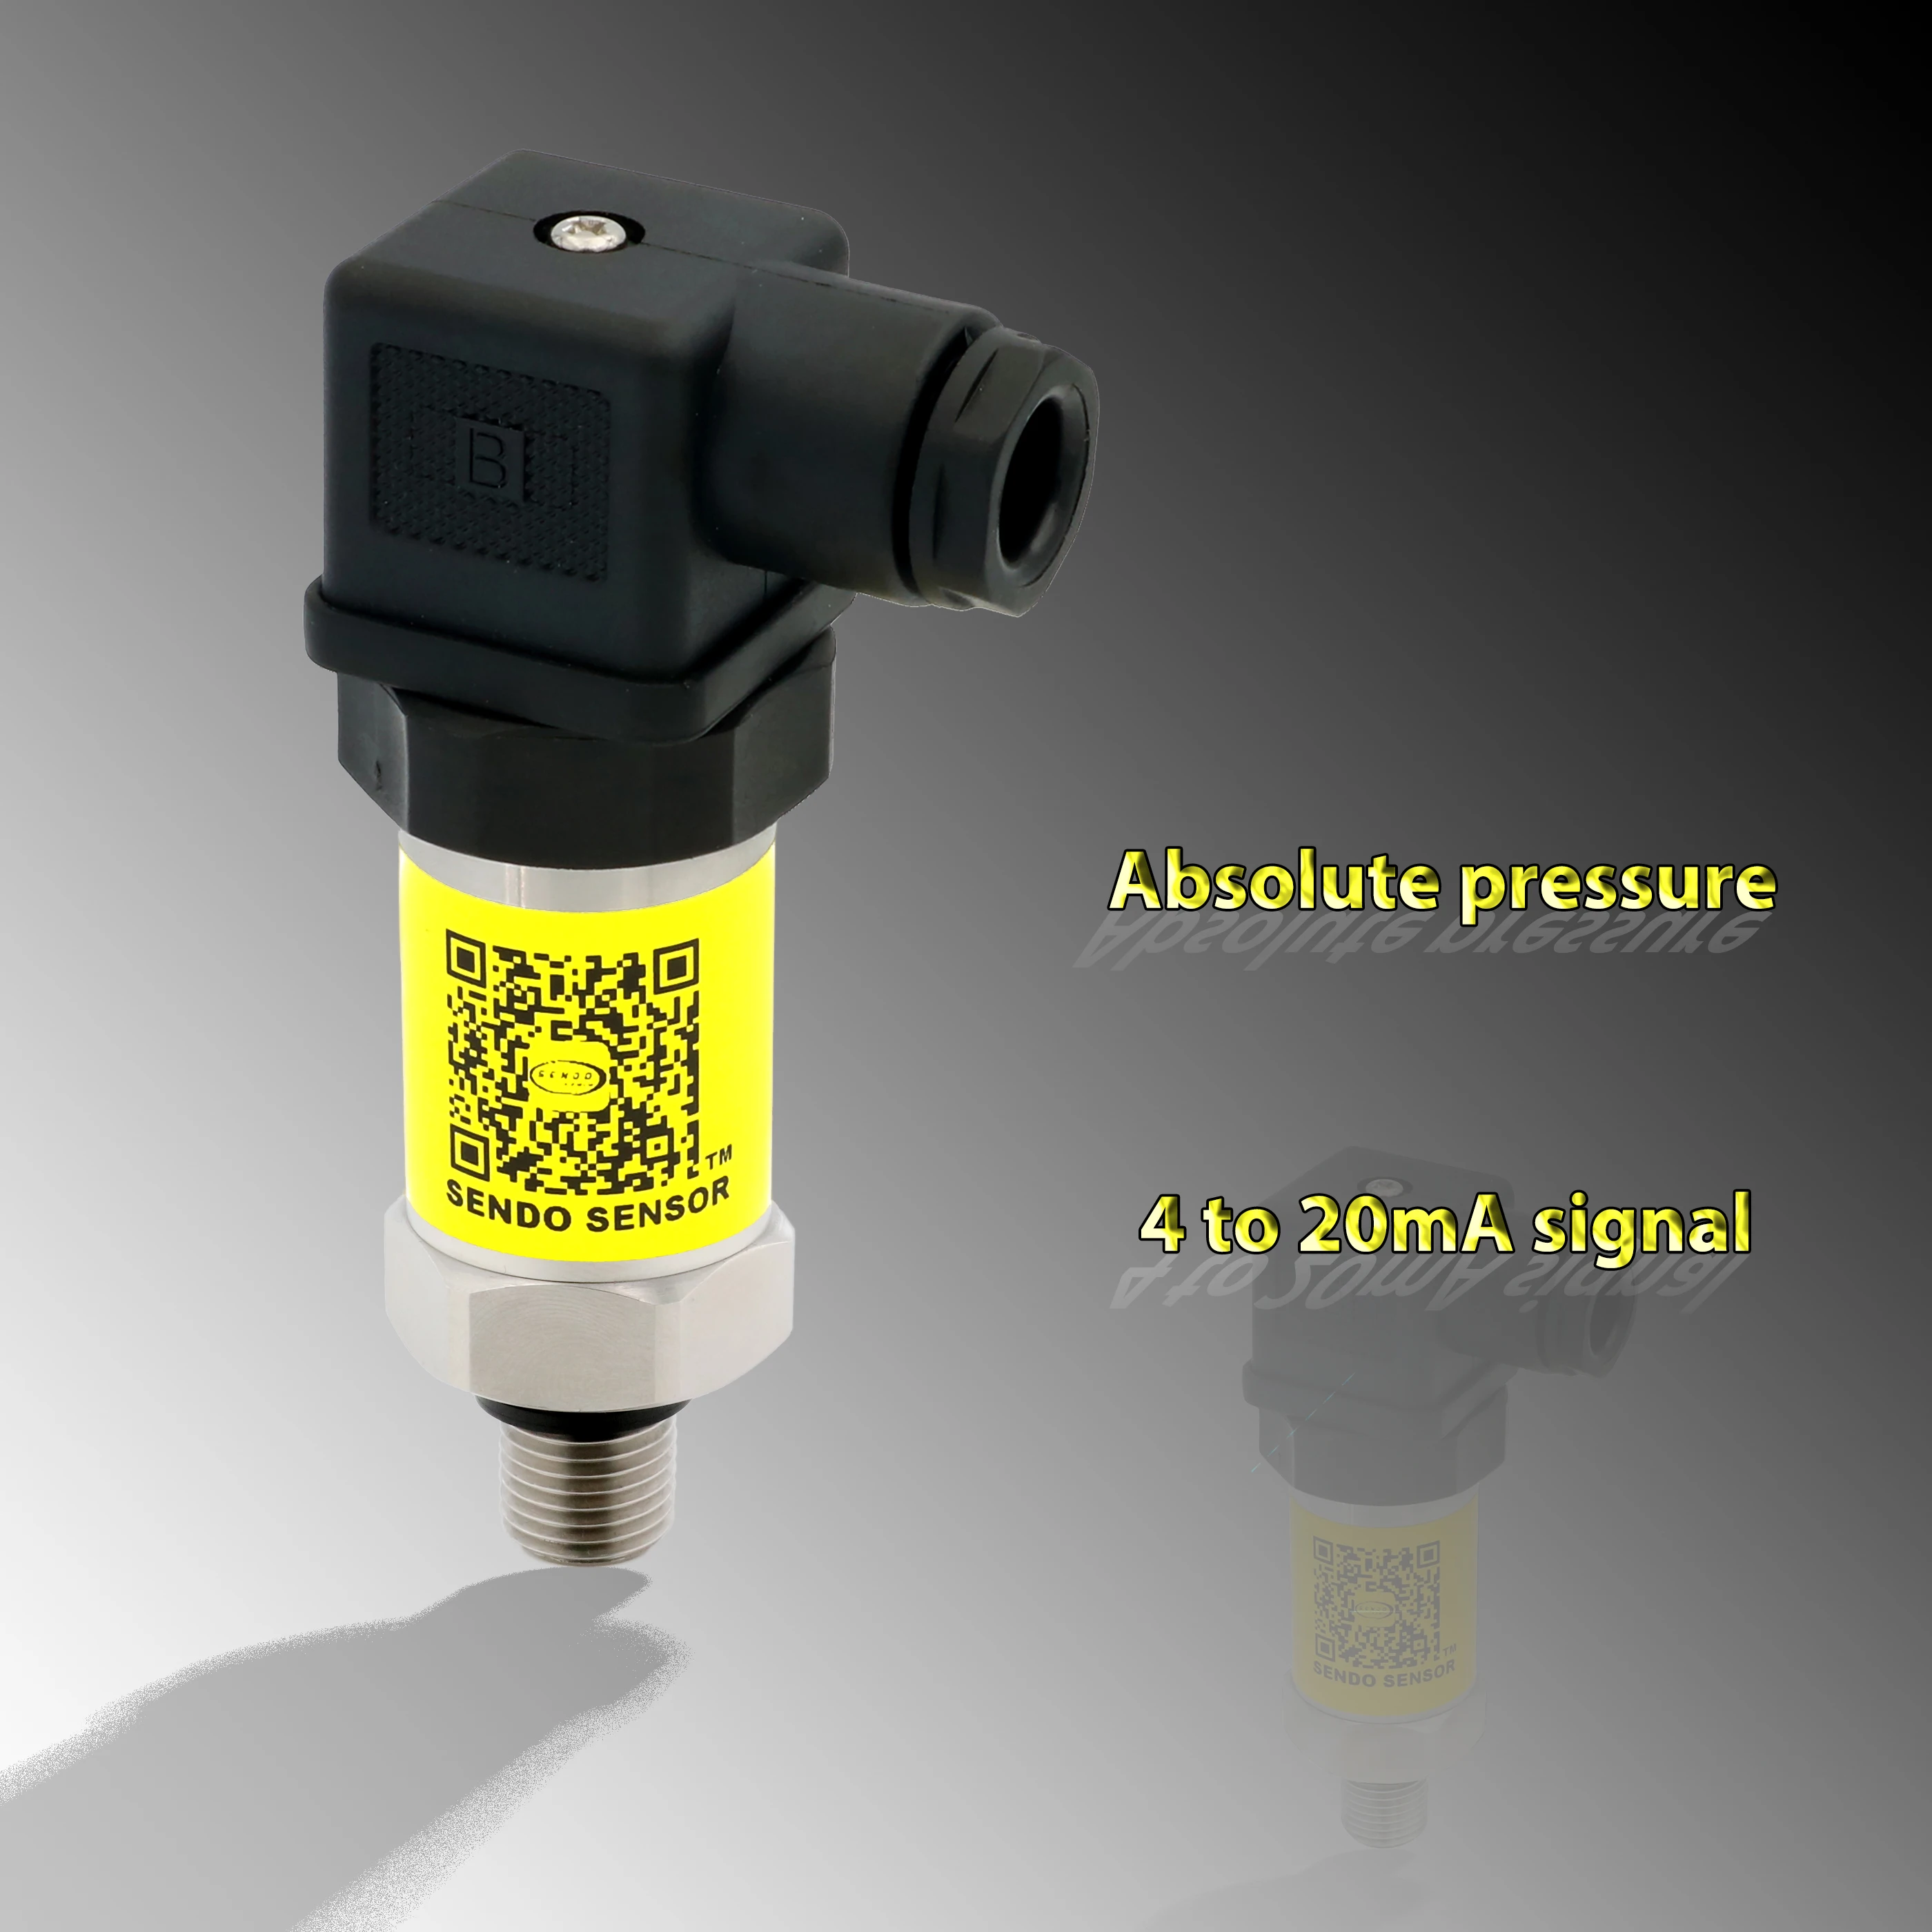 absolute pressure sensor 4 20mA, abs transducer 1bar, 1.6bar, 2bar, 2.5bar, 4bar, 6bar, 10bar, 16bar, 25bar, 9v, 12v, 24v power